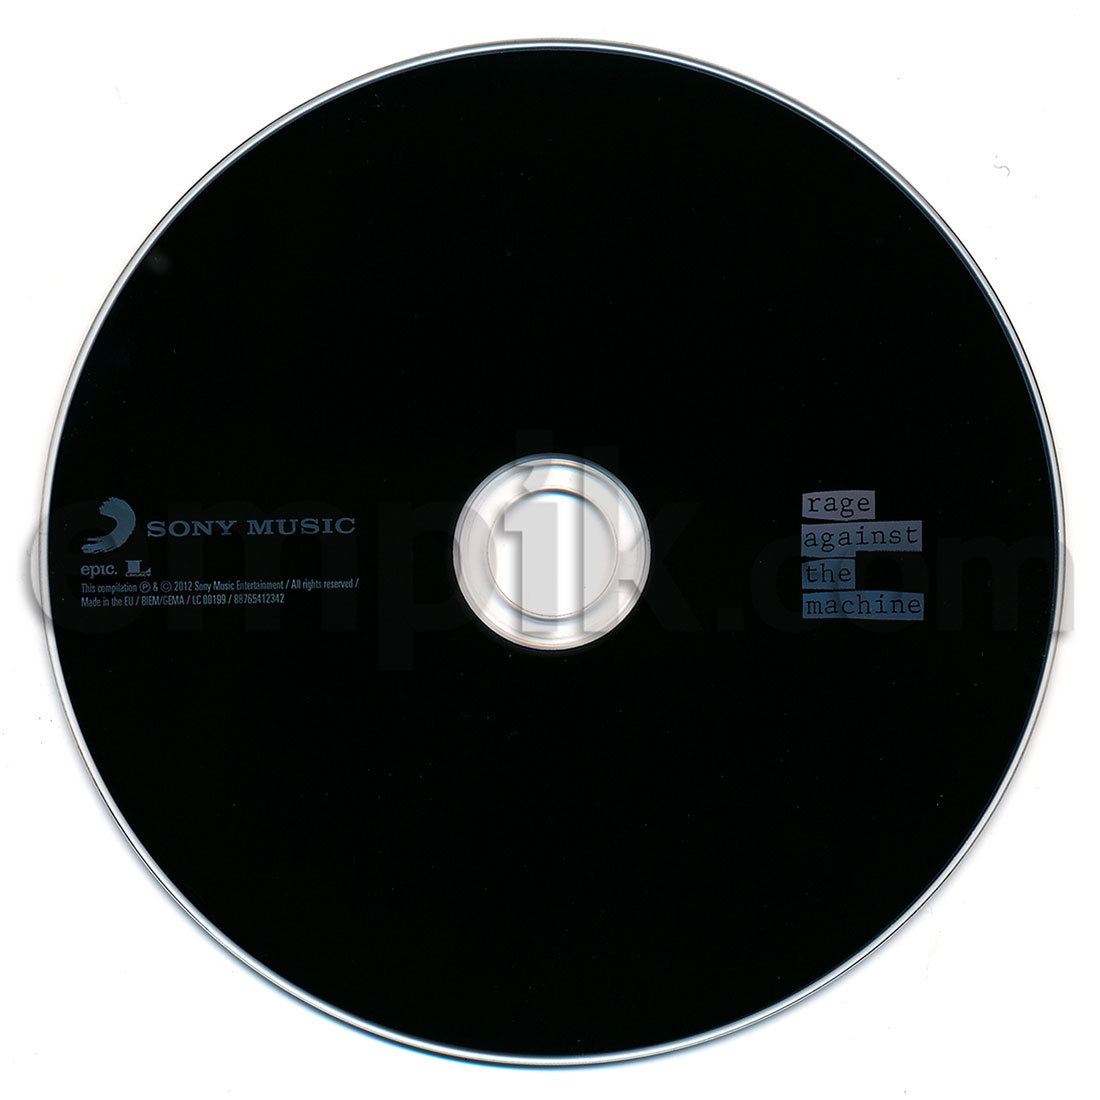 Rage Against The Machine - Rage Against The Machine XX [20th Anniversary  Special Edition] [2CD/DVD] (CD) - Amoeba Music